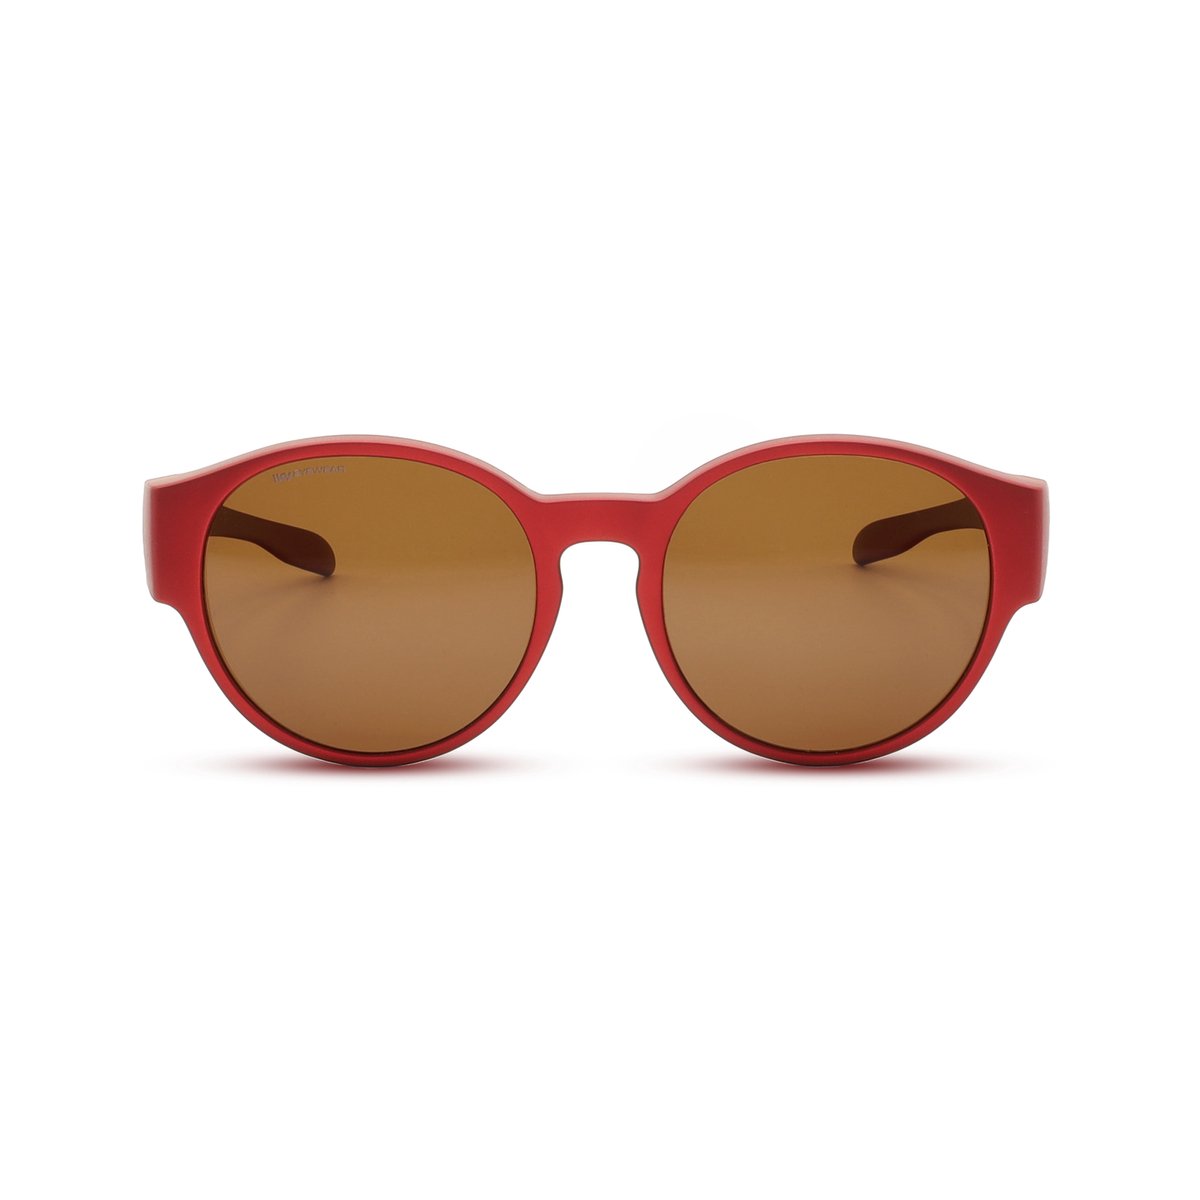 IKY EYEWEAR overzet zonnebril OB-1007E3-rood-mat-metallic